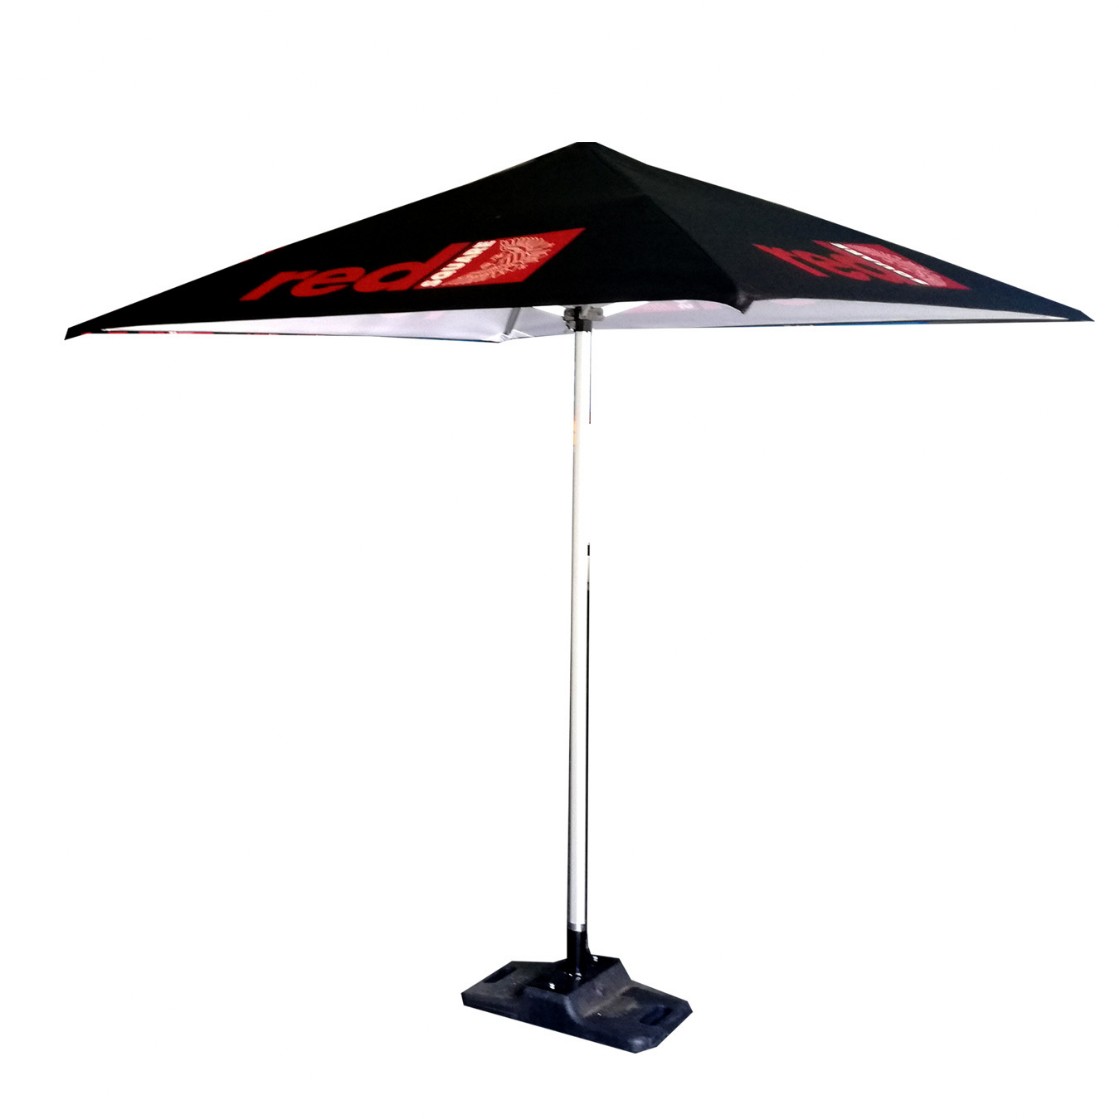 Foldaway parasols for restaurants sold in pulk